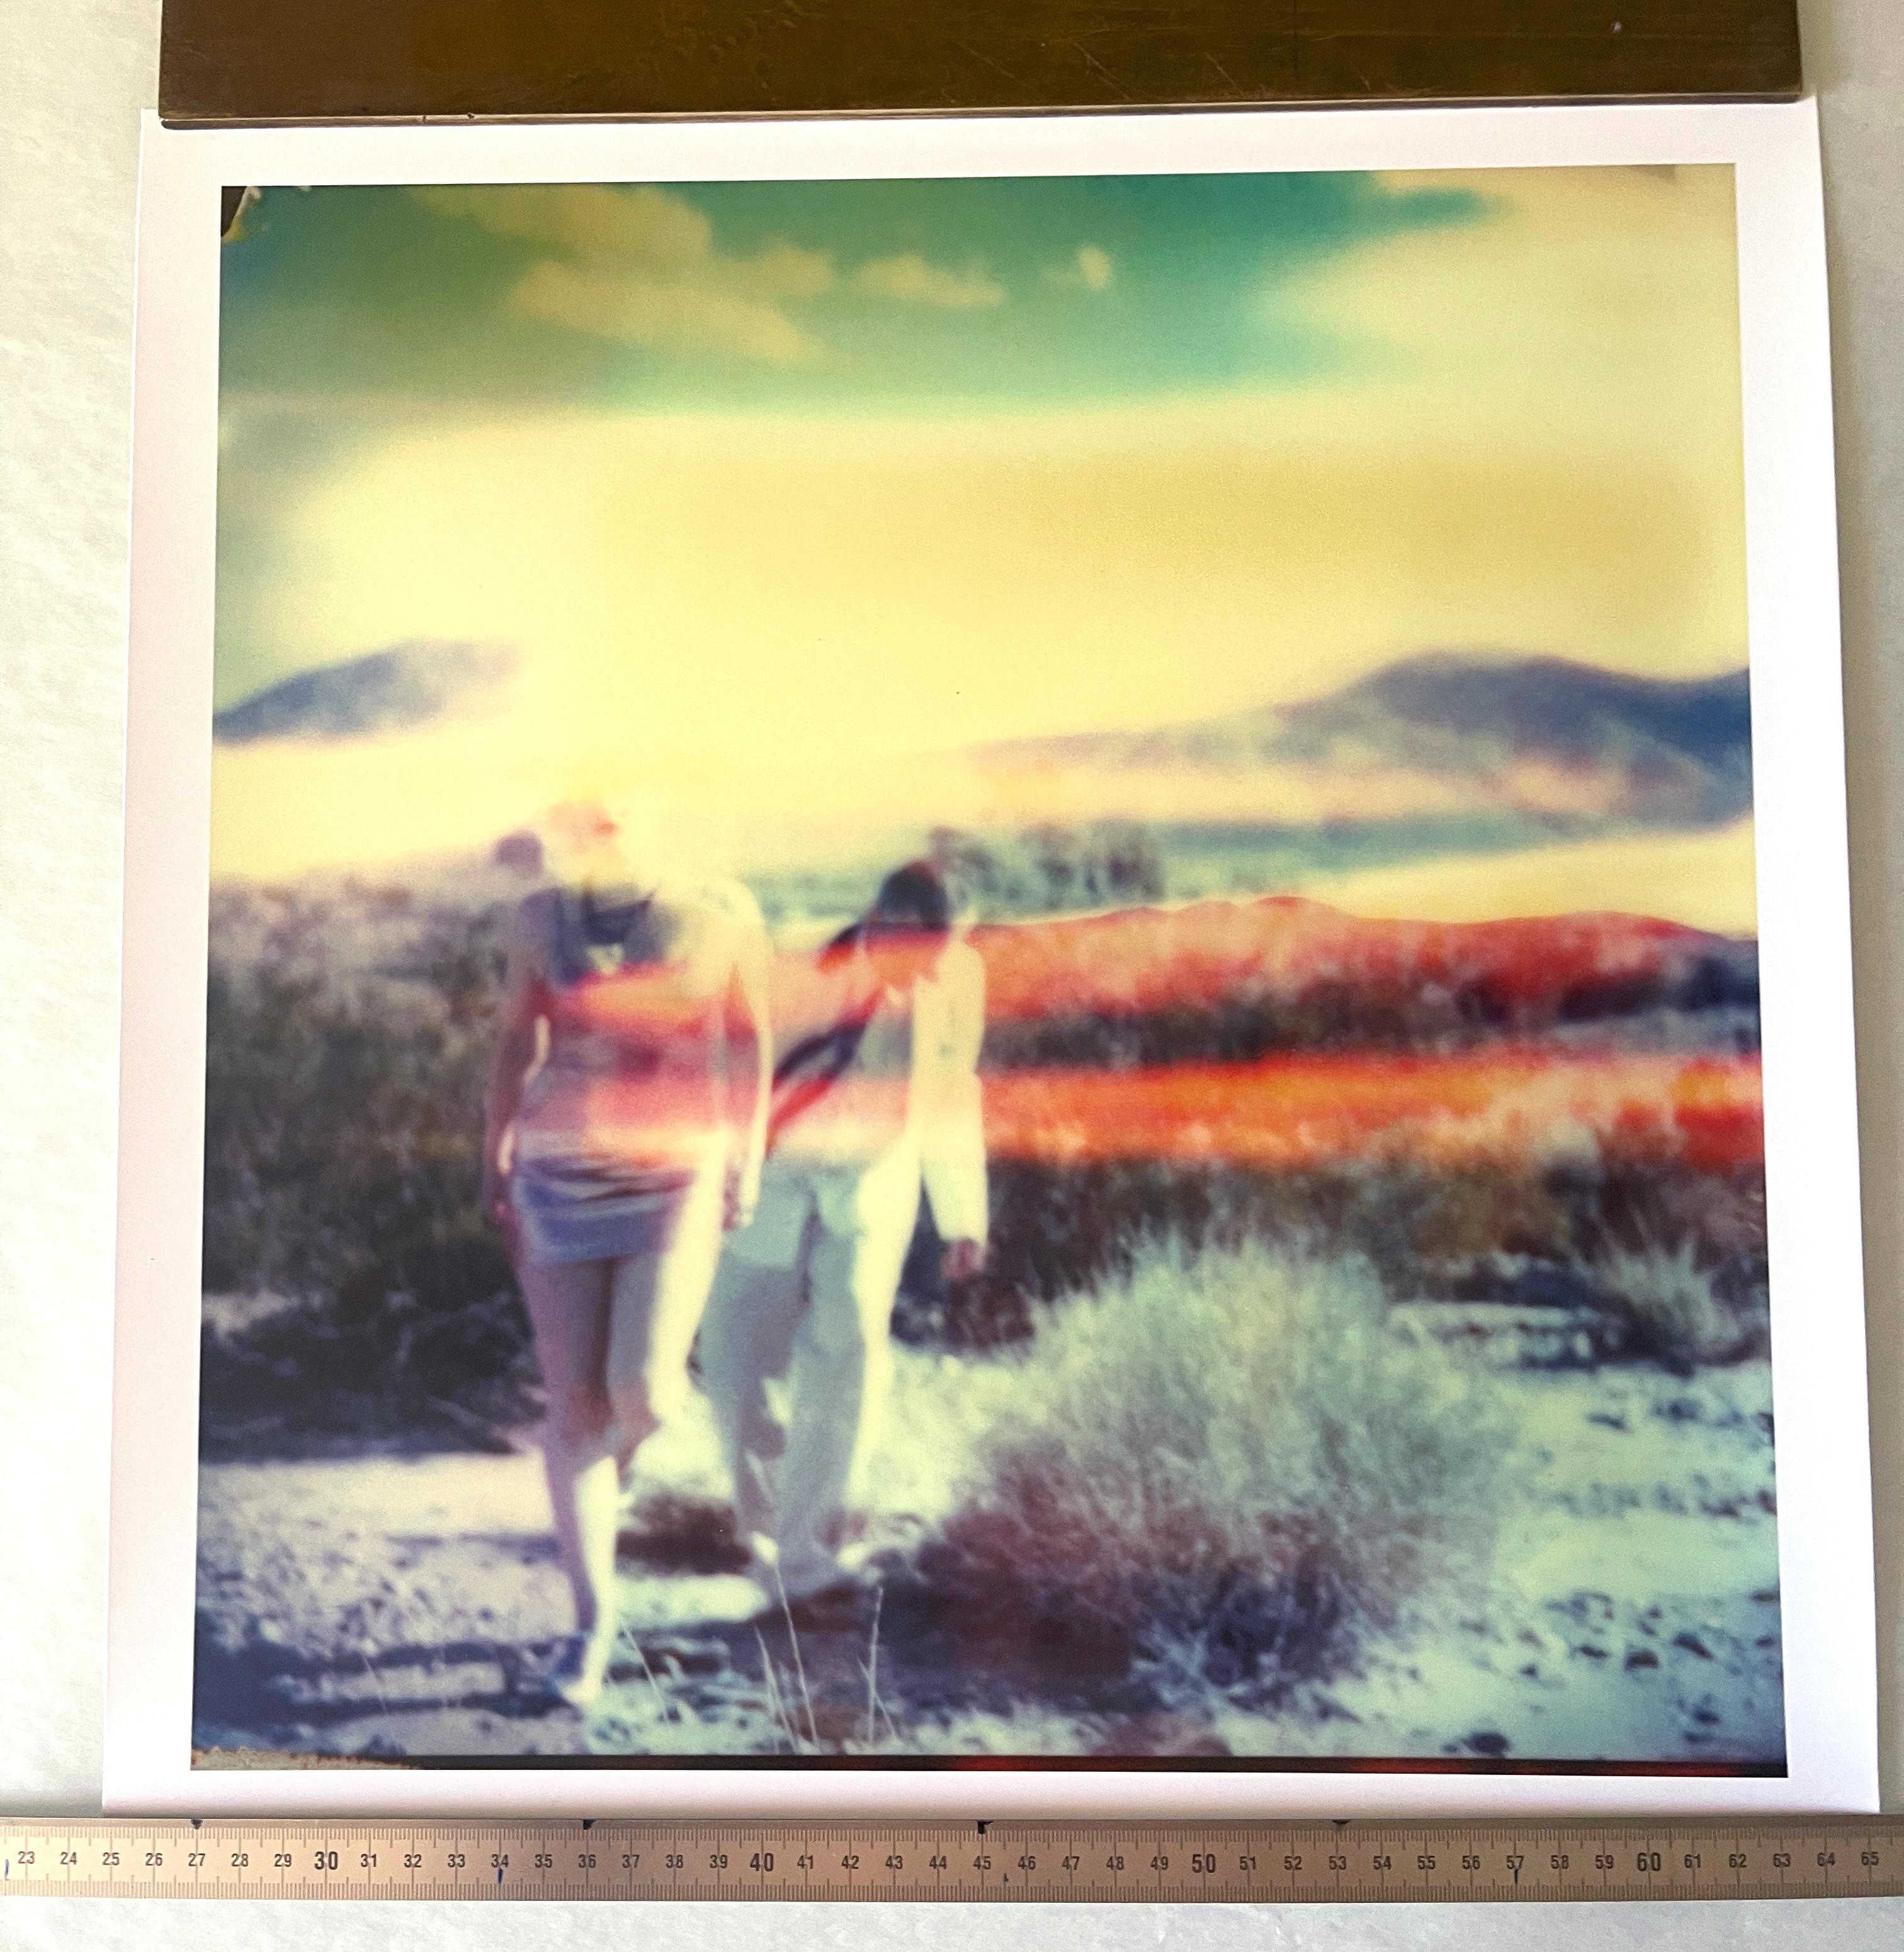 Memory of a Dream (29 Palms, CA) - Polaroid, 21st Century, expired, Contemporary - Photograph by Stefanie Schneider